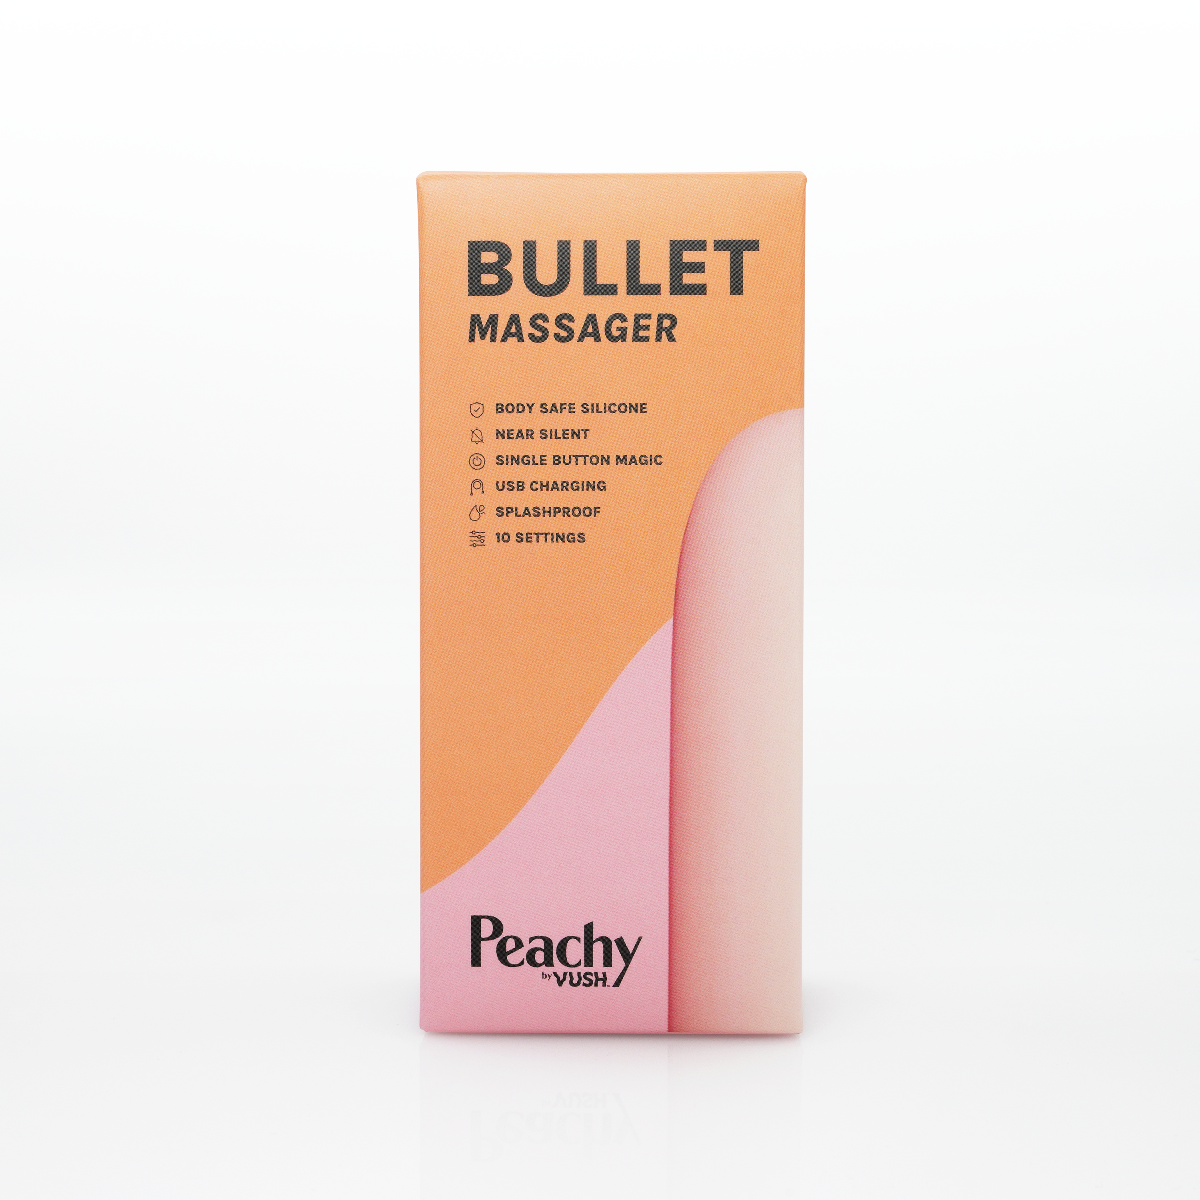 Peachy Bullet Massager by Vush